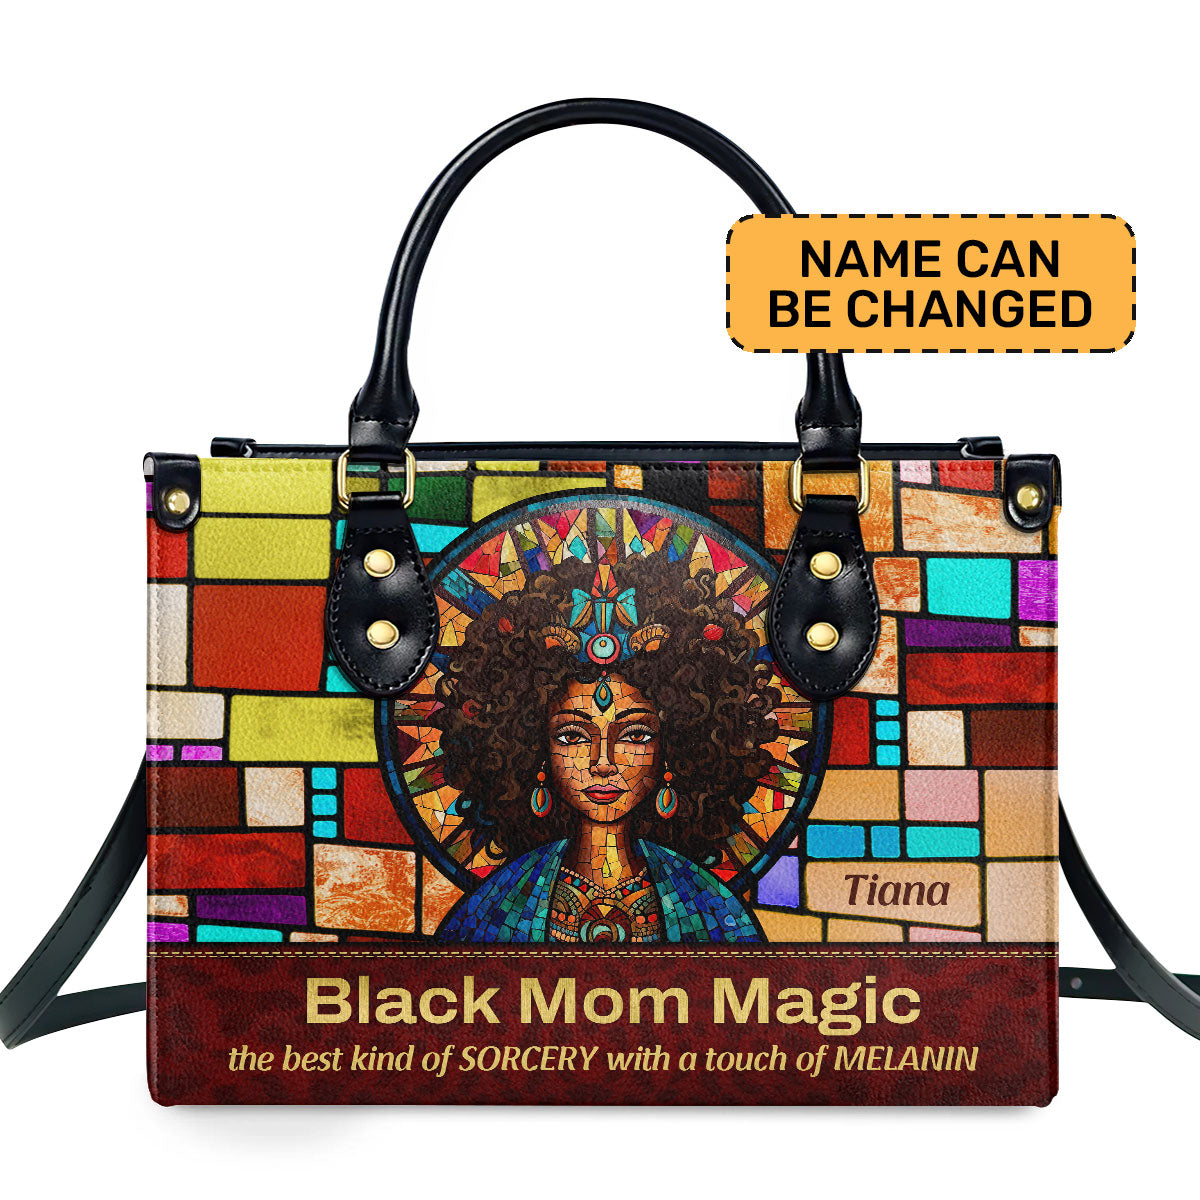 BLACK MOM MAGIC - Personalized Leather Handbag - SB14A